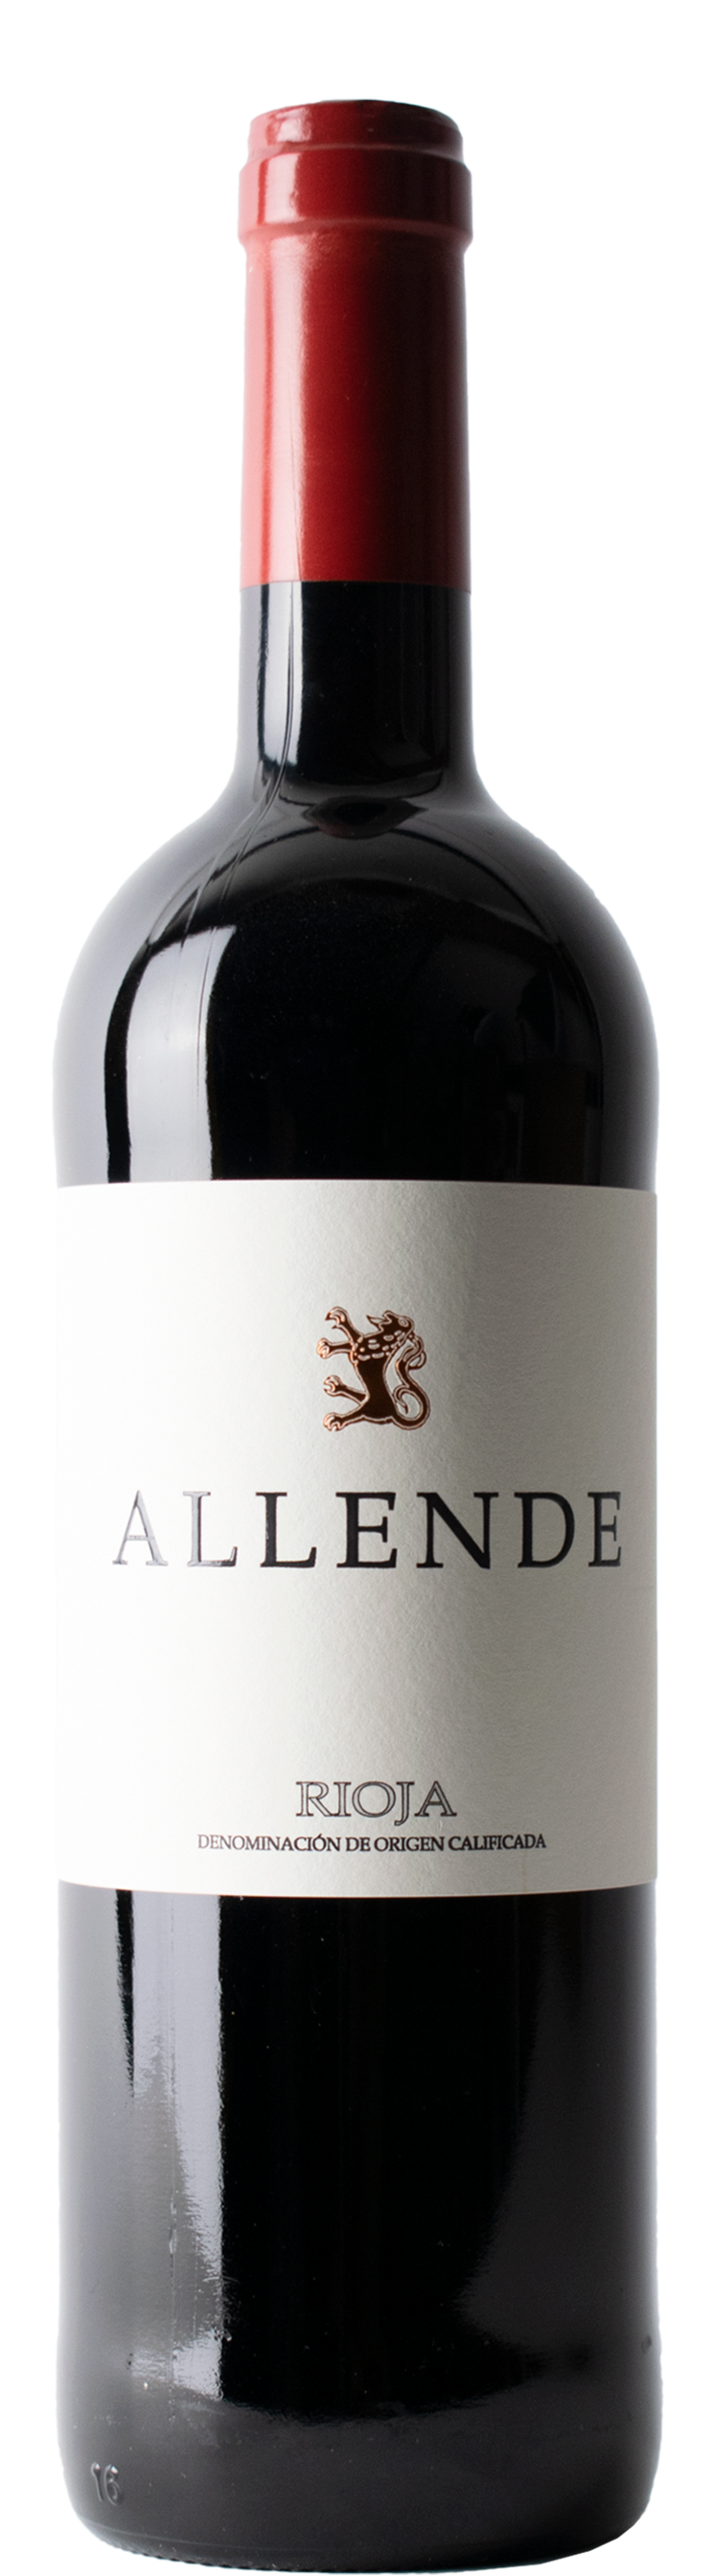 Rioja 2014 Allende